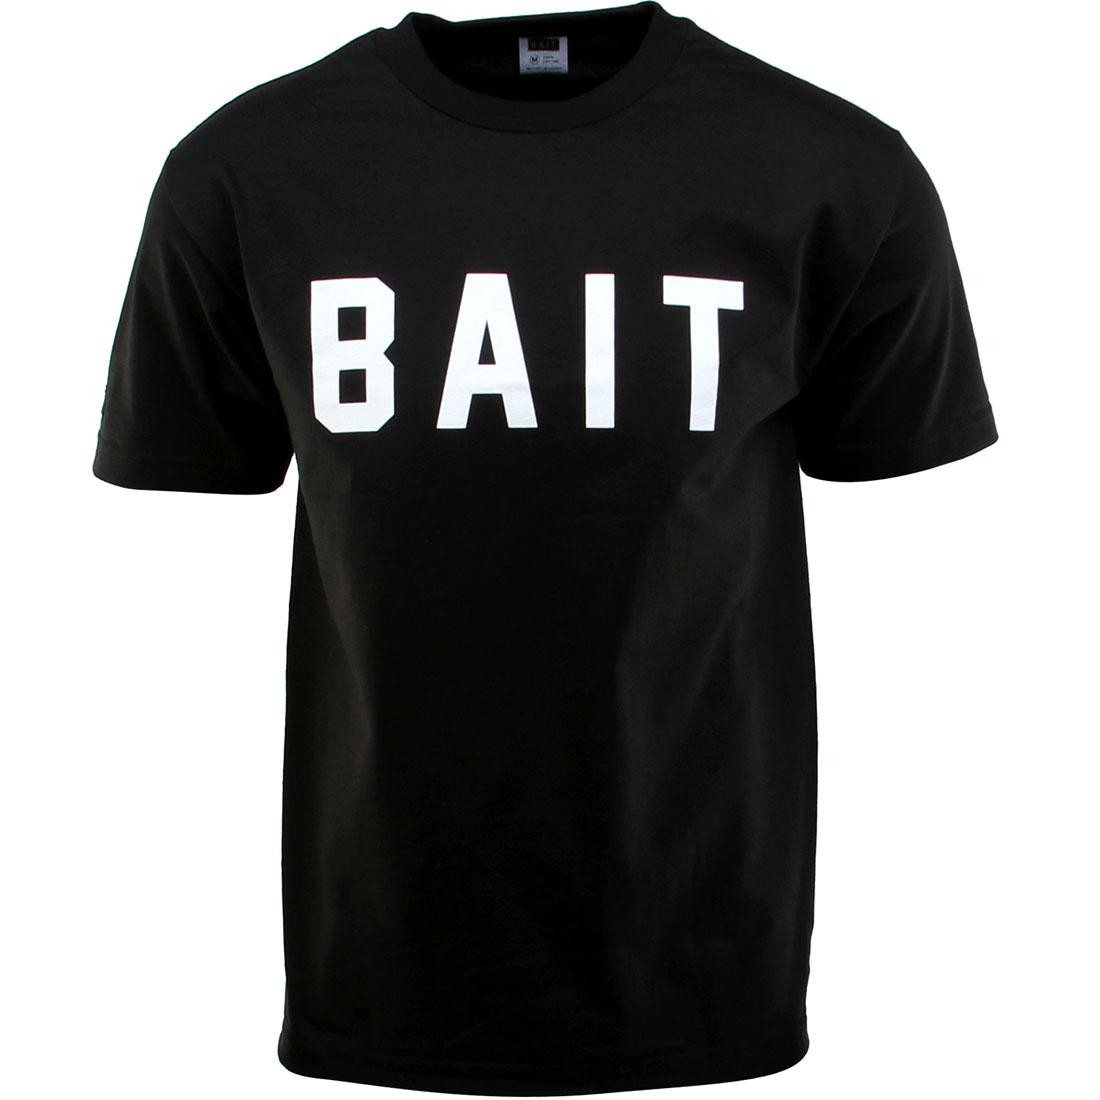 BAIT Logo Tee (black / white)